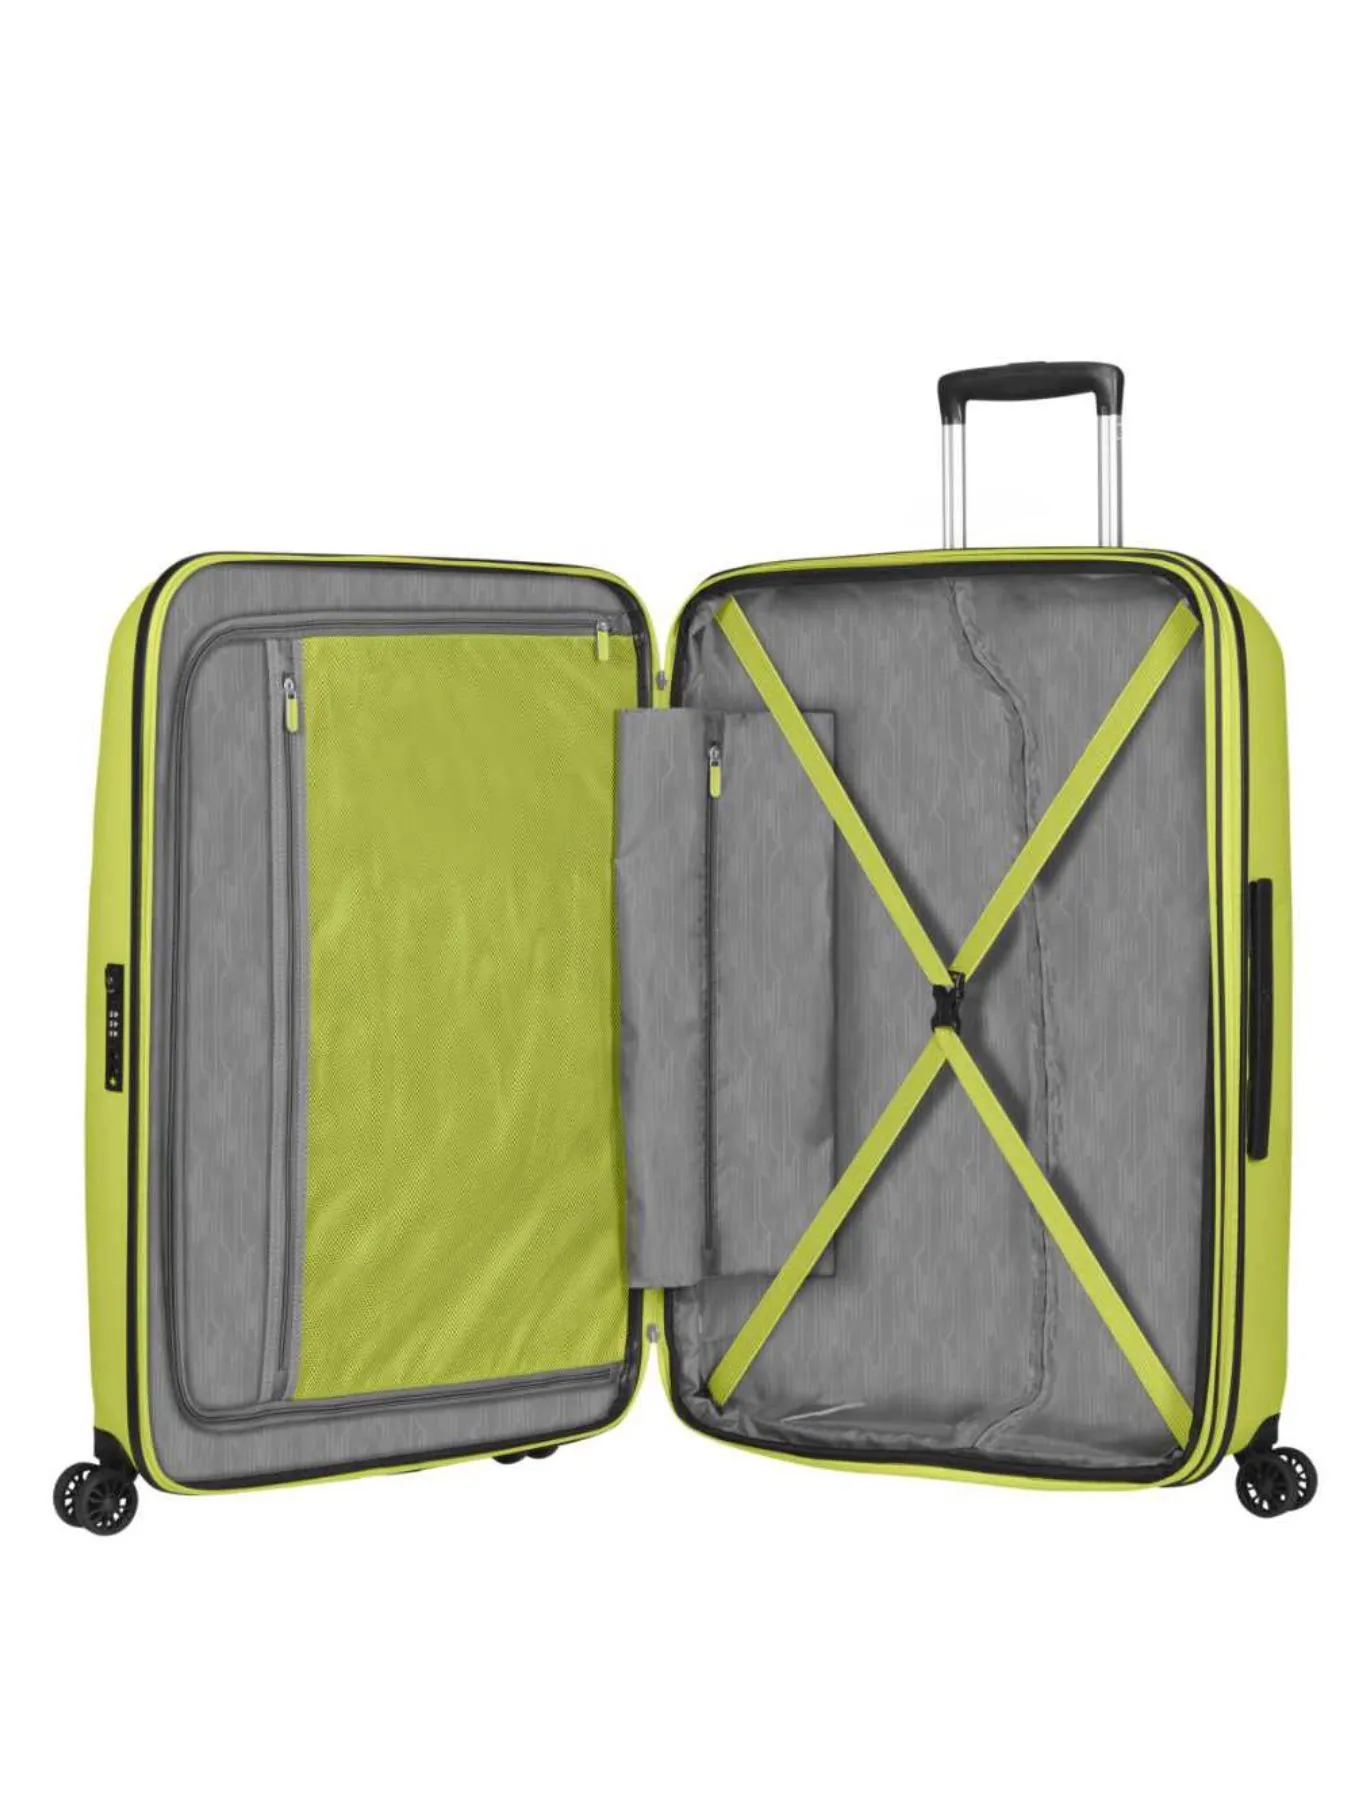 AMERICAN TOURISTER Bon Air DLX Veliki žuti kofer 